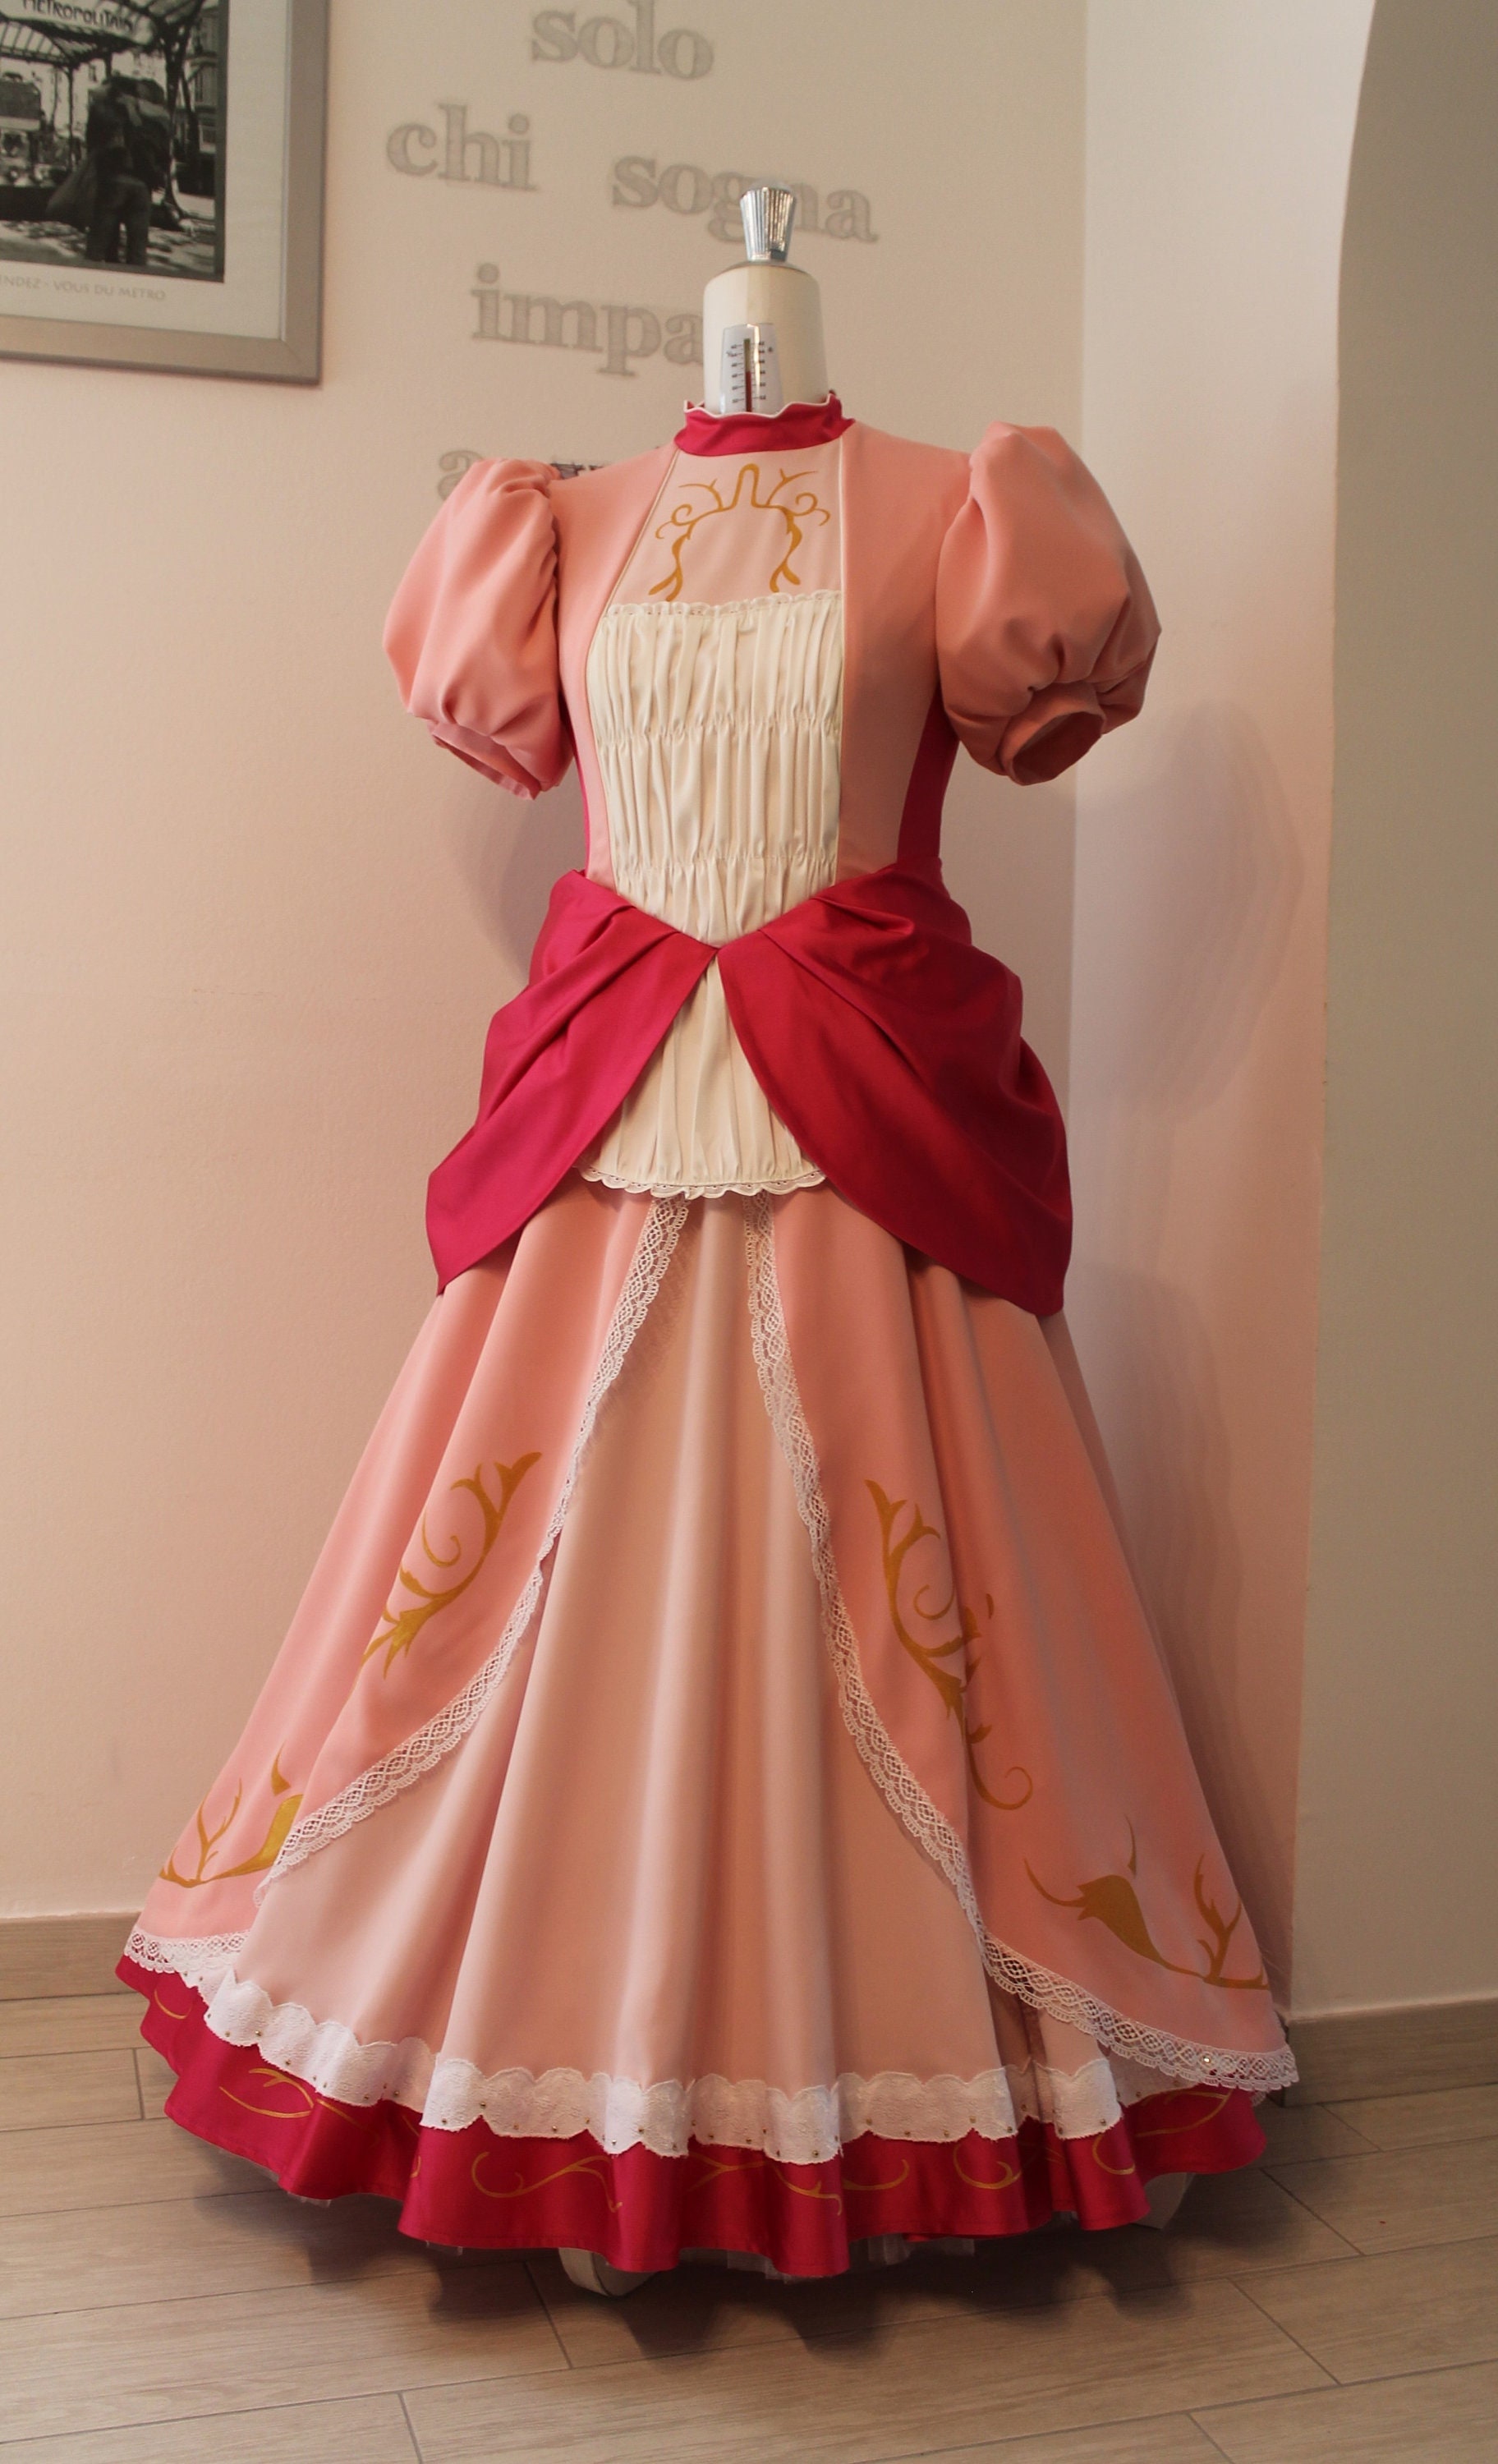 Princesse Peach Cosplay Costume Peach Robe Rose Adulte